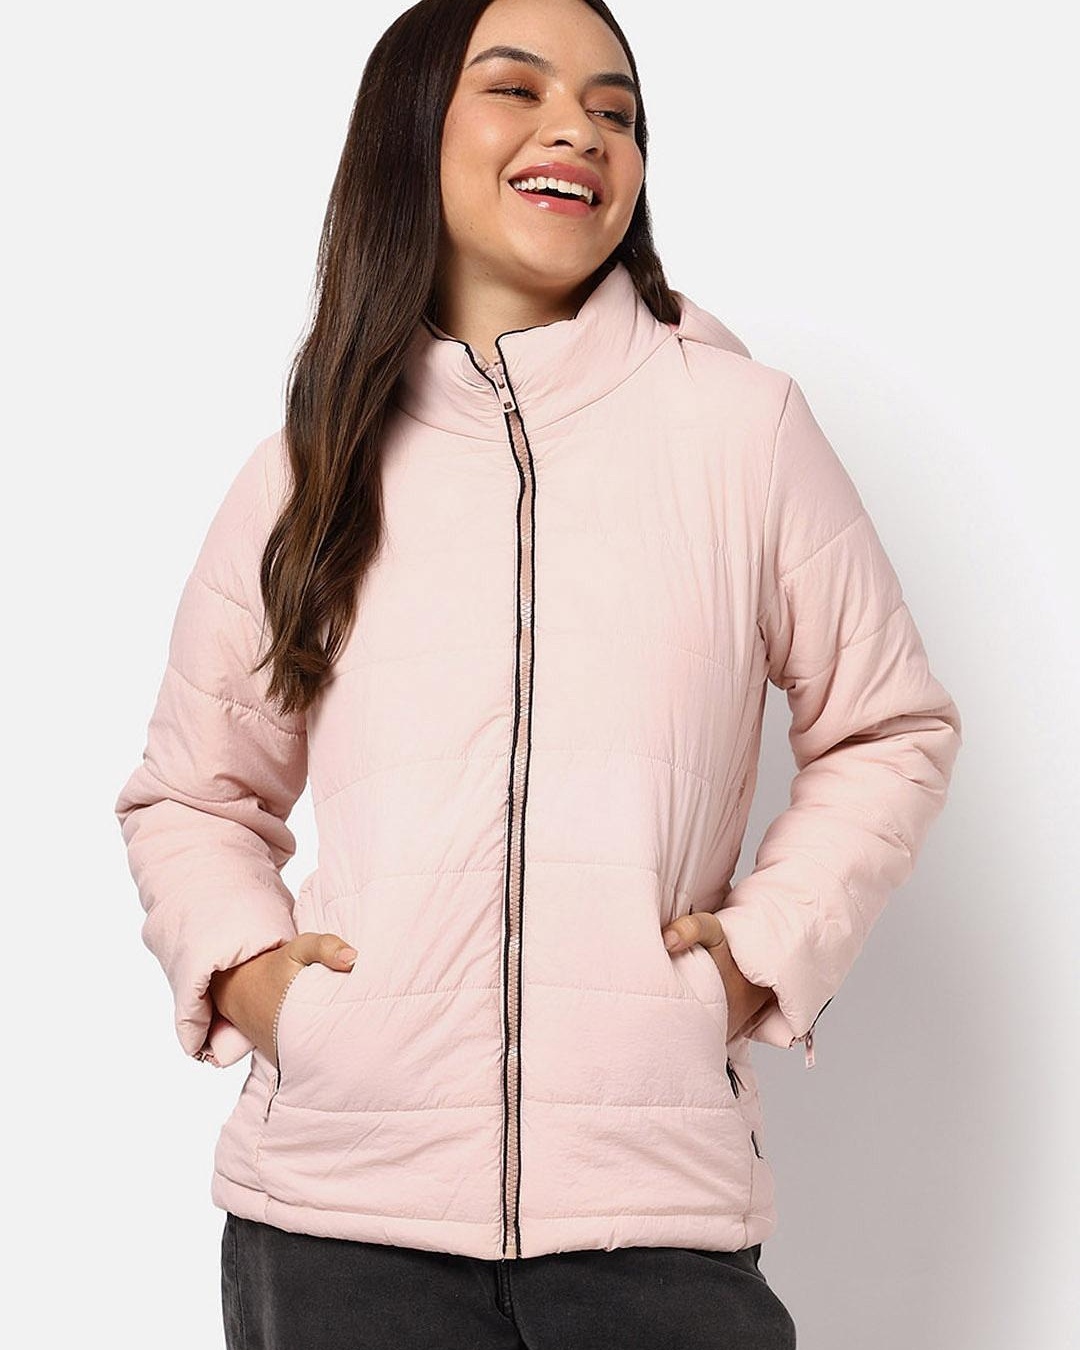 Buy Women's Pink Puffer Hooded Jacket Online at Bewakoof